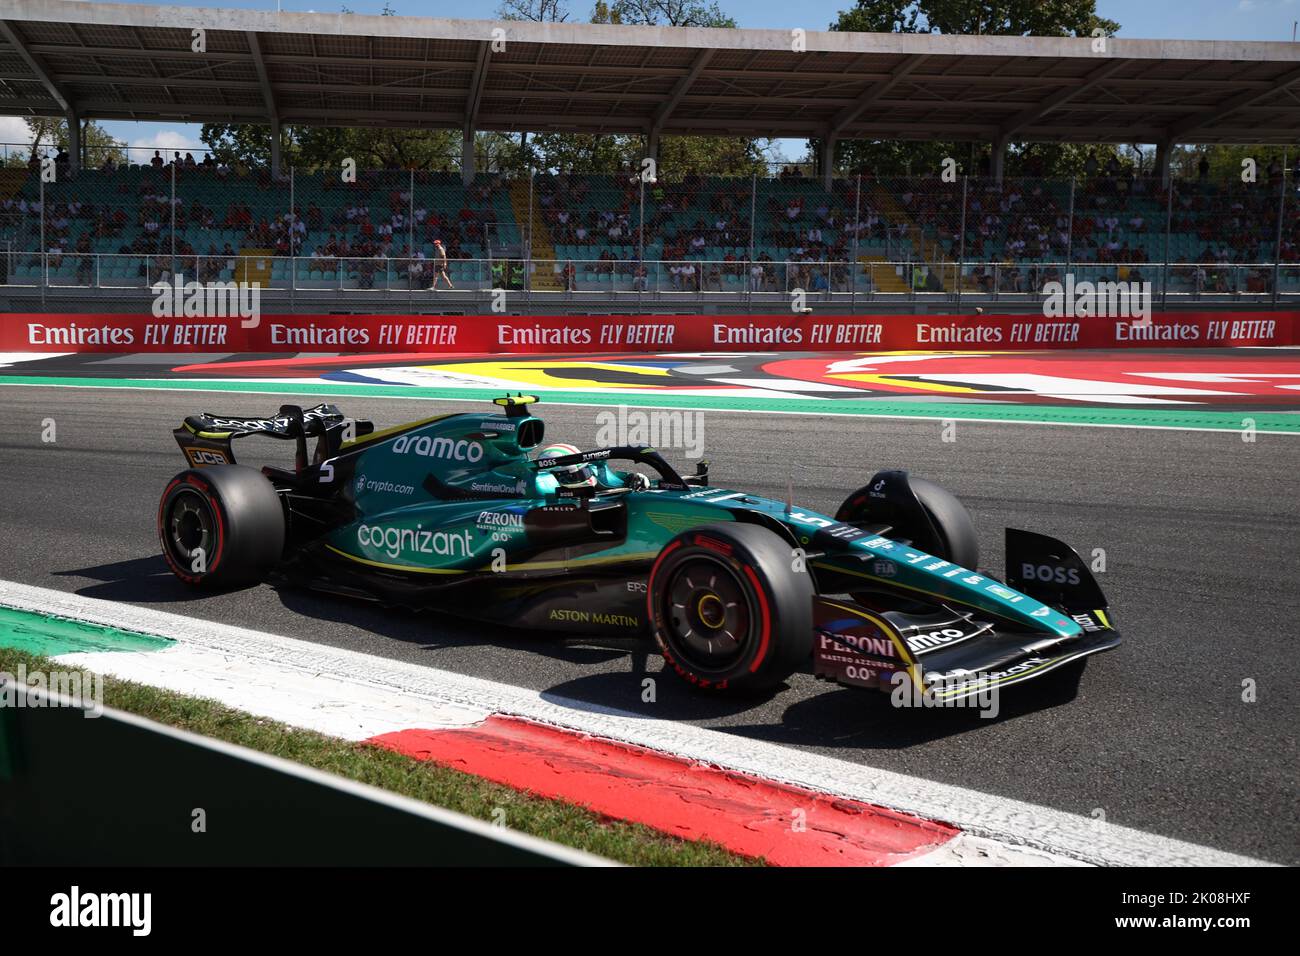 Sebastian Vettel of Aston Martin on track during final practice for the F1 Grand Prix of Italy